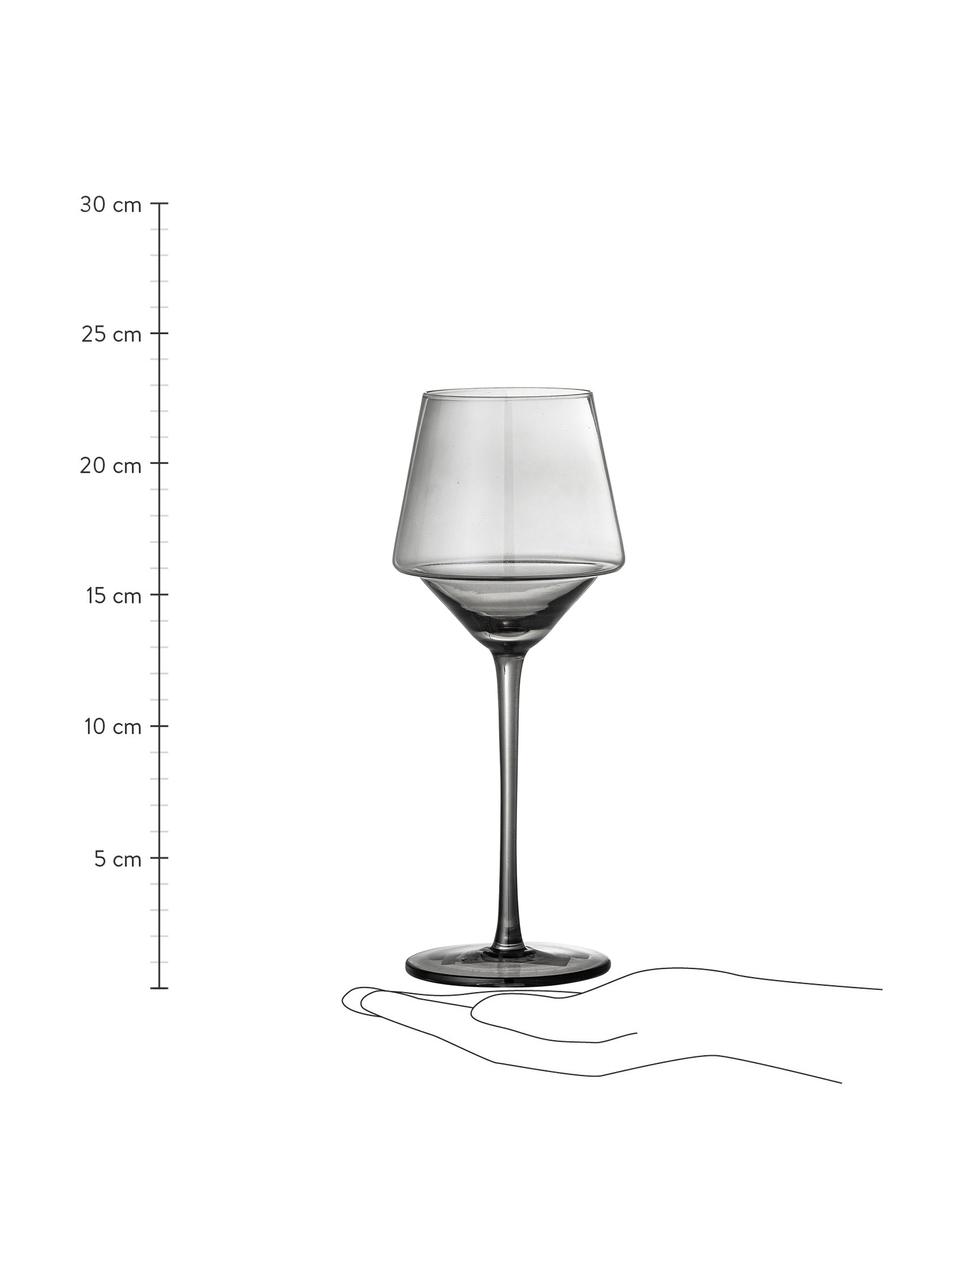 Bicchiere vino grigio Yvette 4 pz, Vetro, Grigio, Ø 9 x H 23 cm. 300 ml